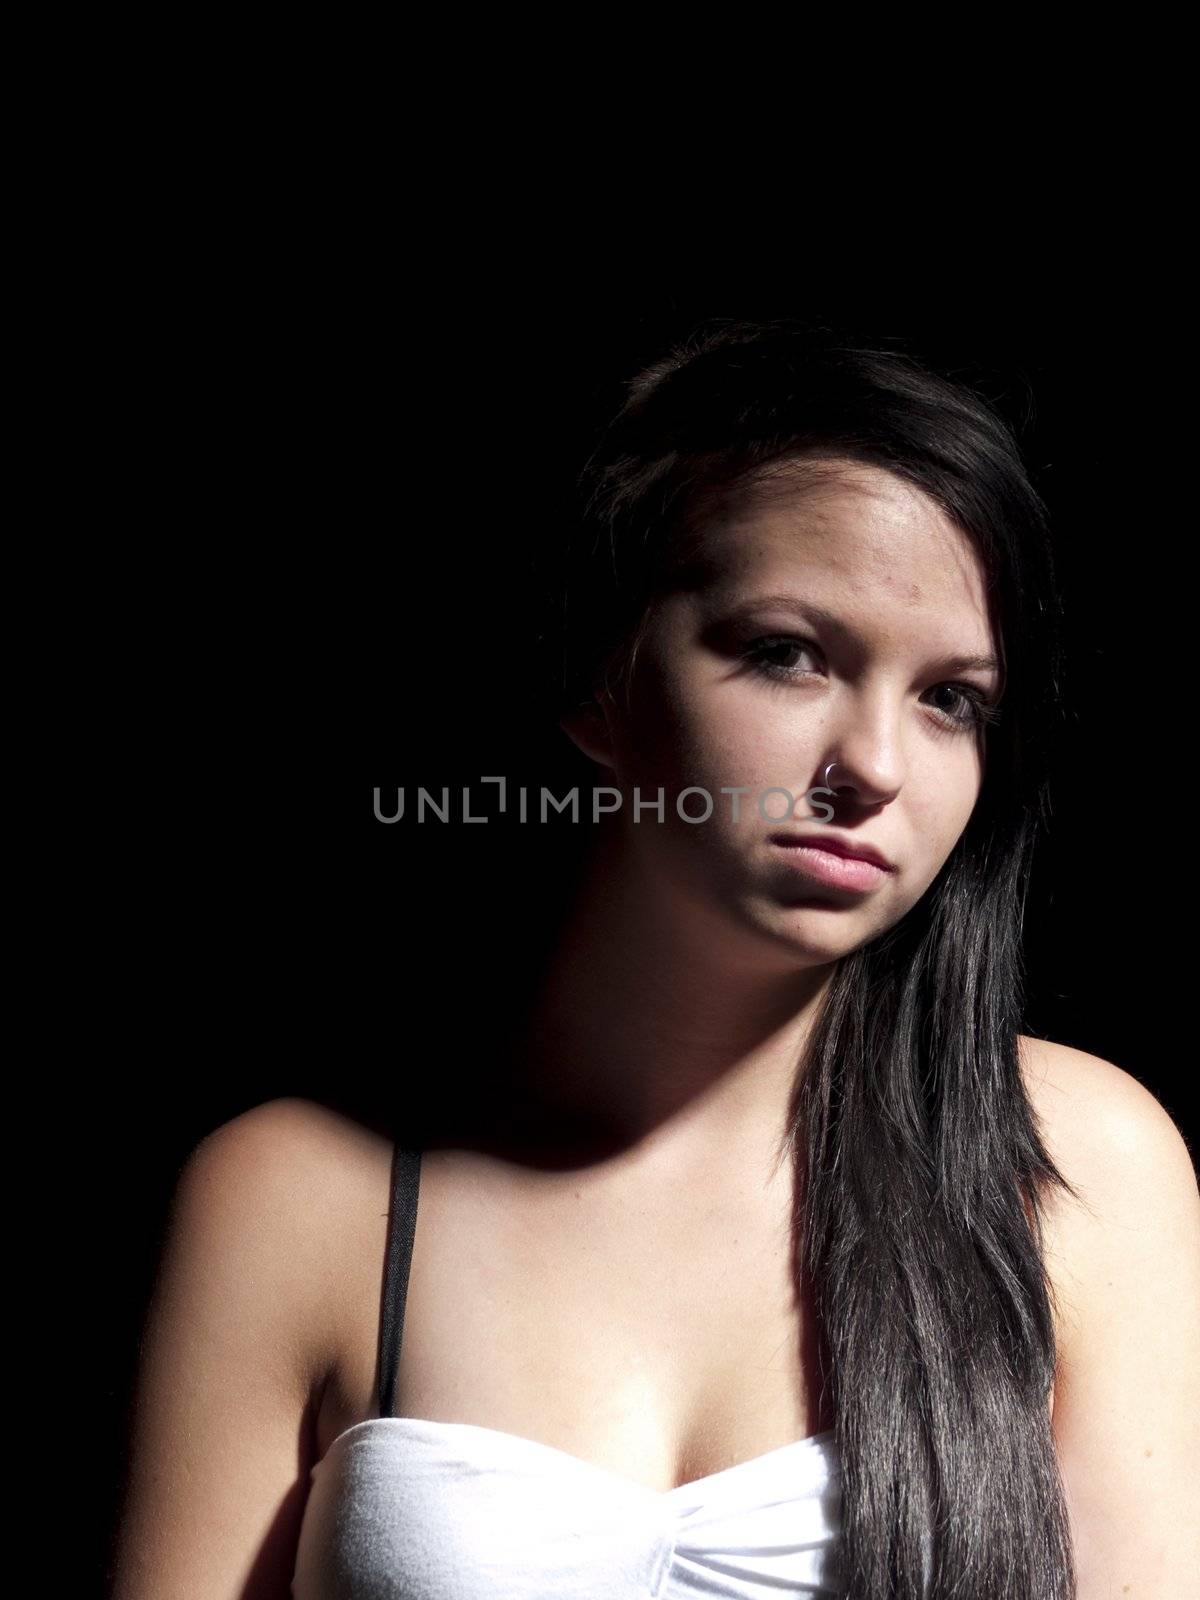 a teen girl portrait with moody lighting